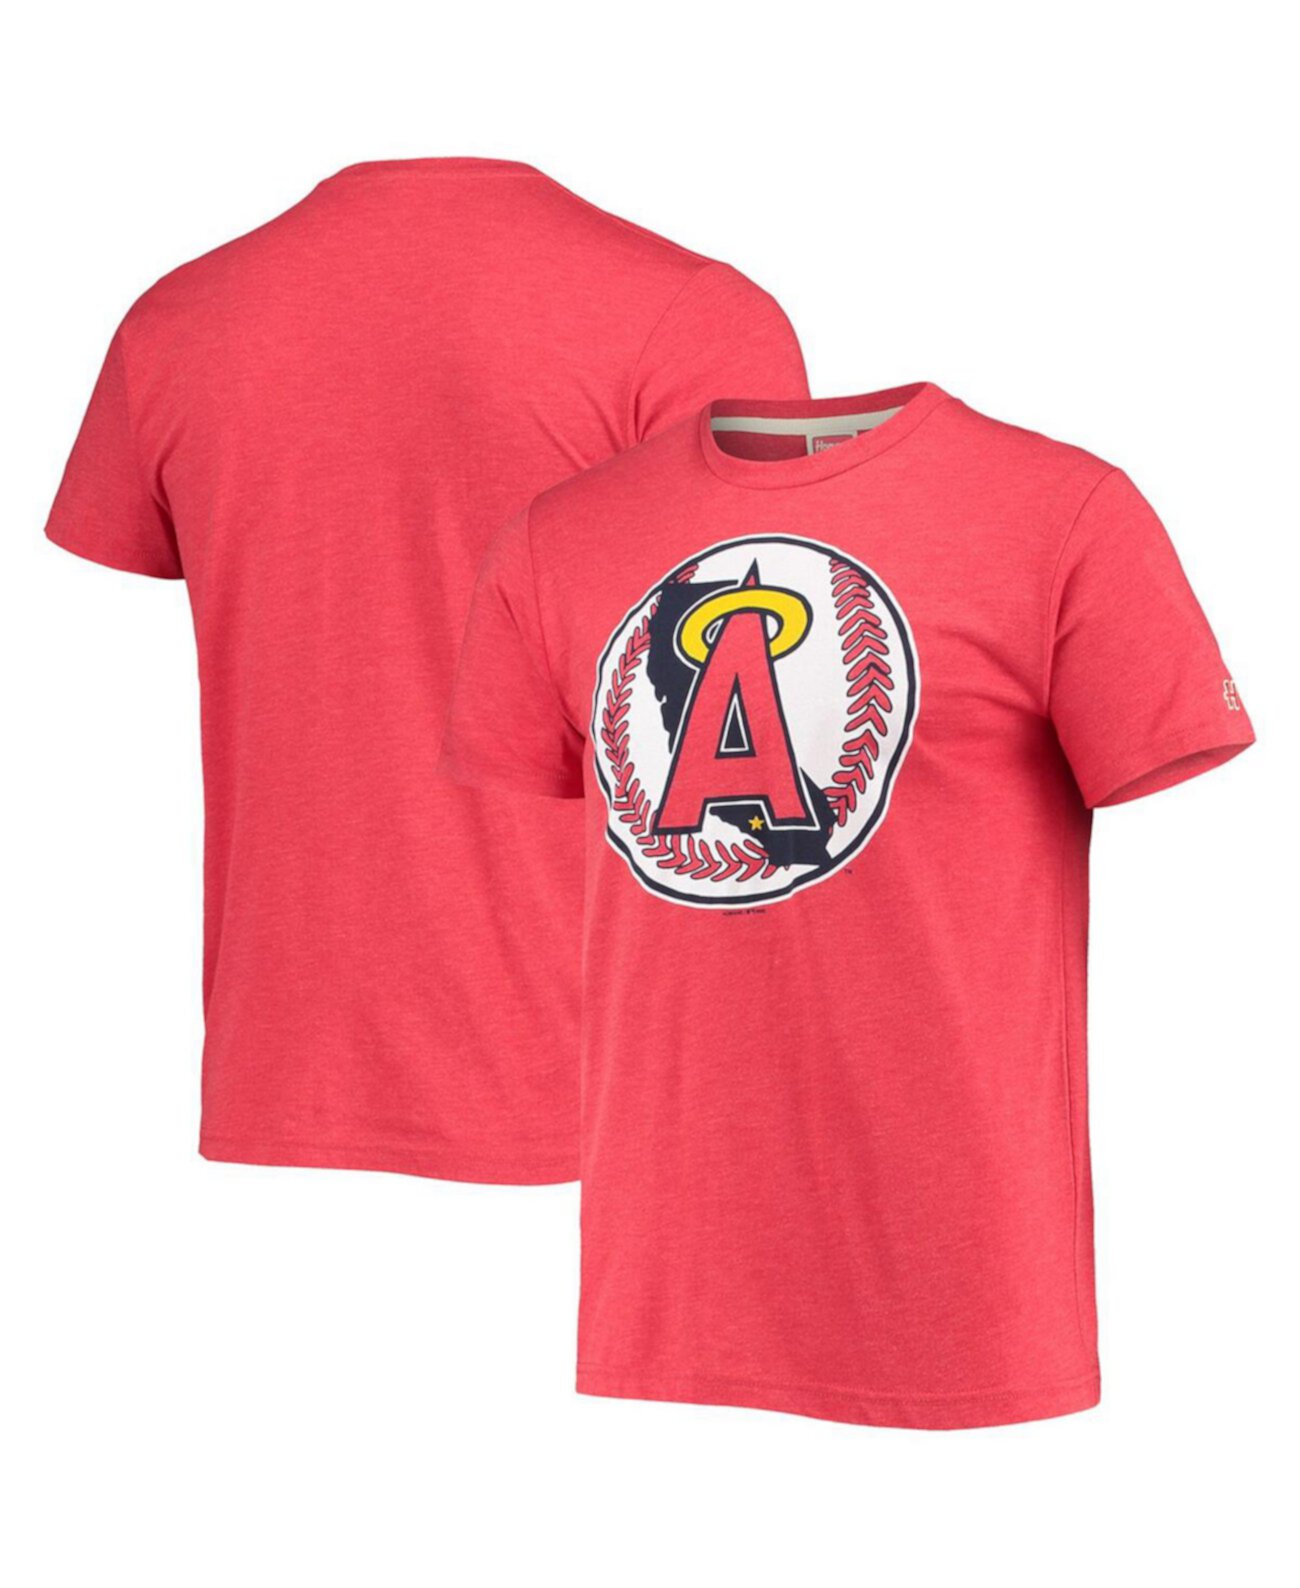 Мужская красная футболка Los Angeles Angels с нарисованным от руки логотипом Tri-Blend Homage